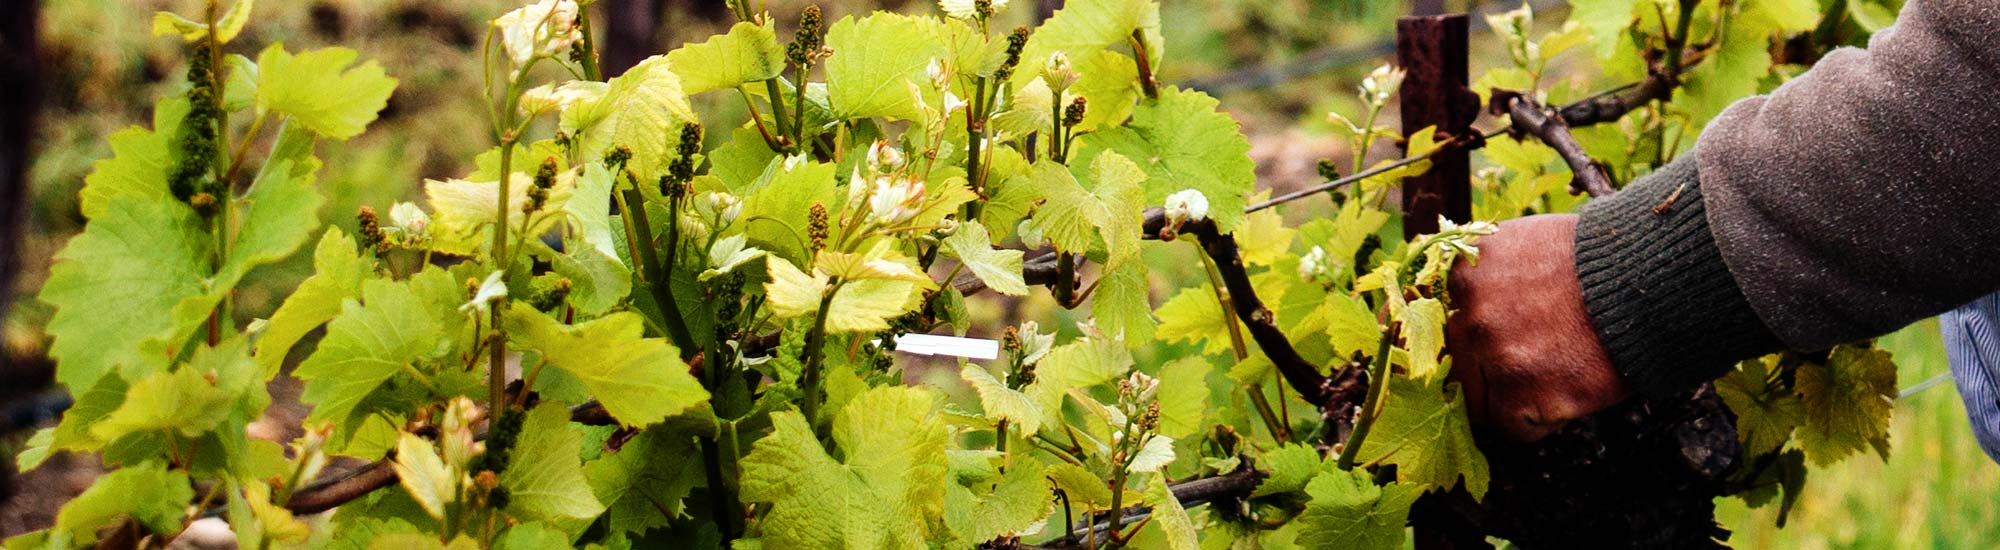 12/1 Renew Vineyard & Winery Certification